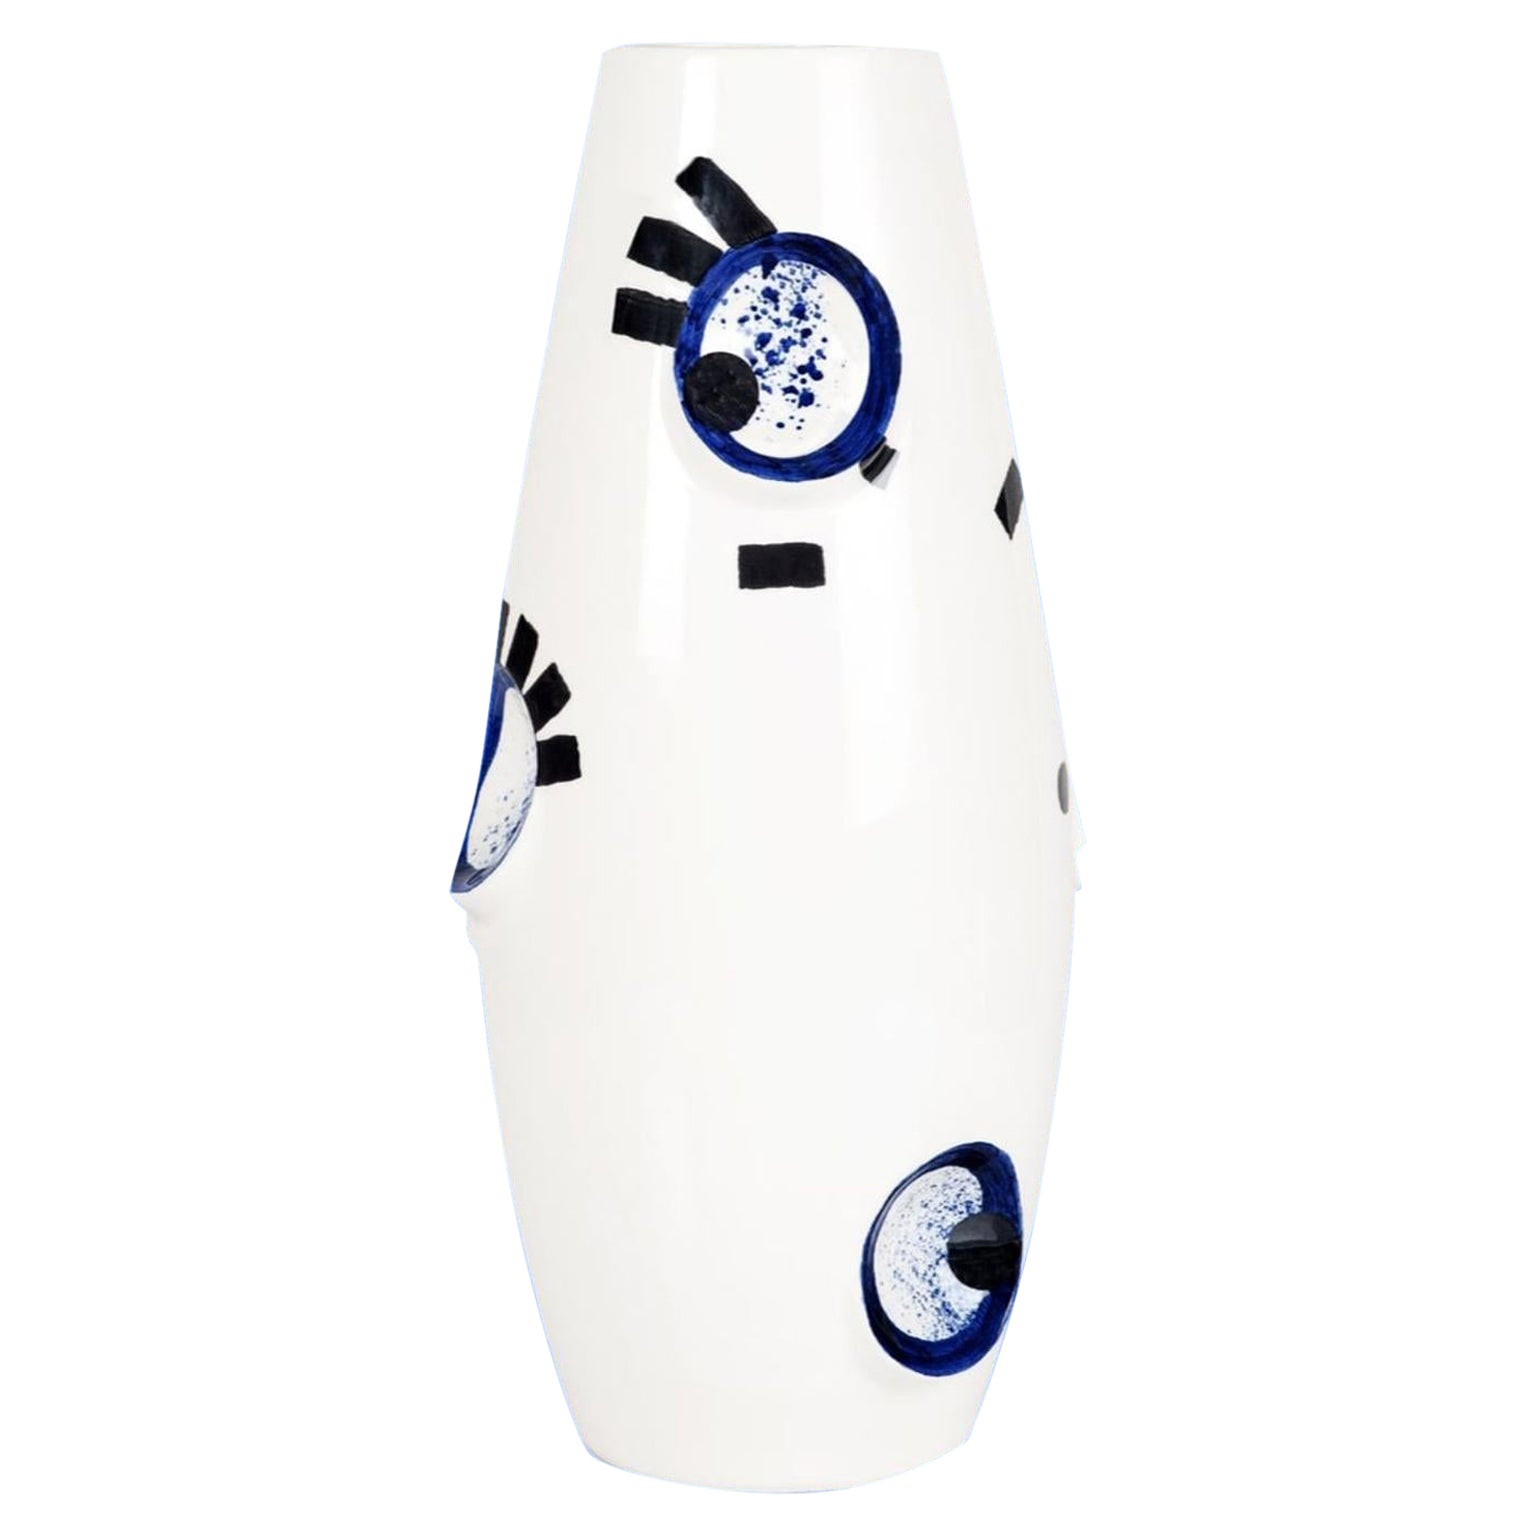  OKO Colbalt Ceramic Vase by Malwina Konopacka For Sale